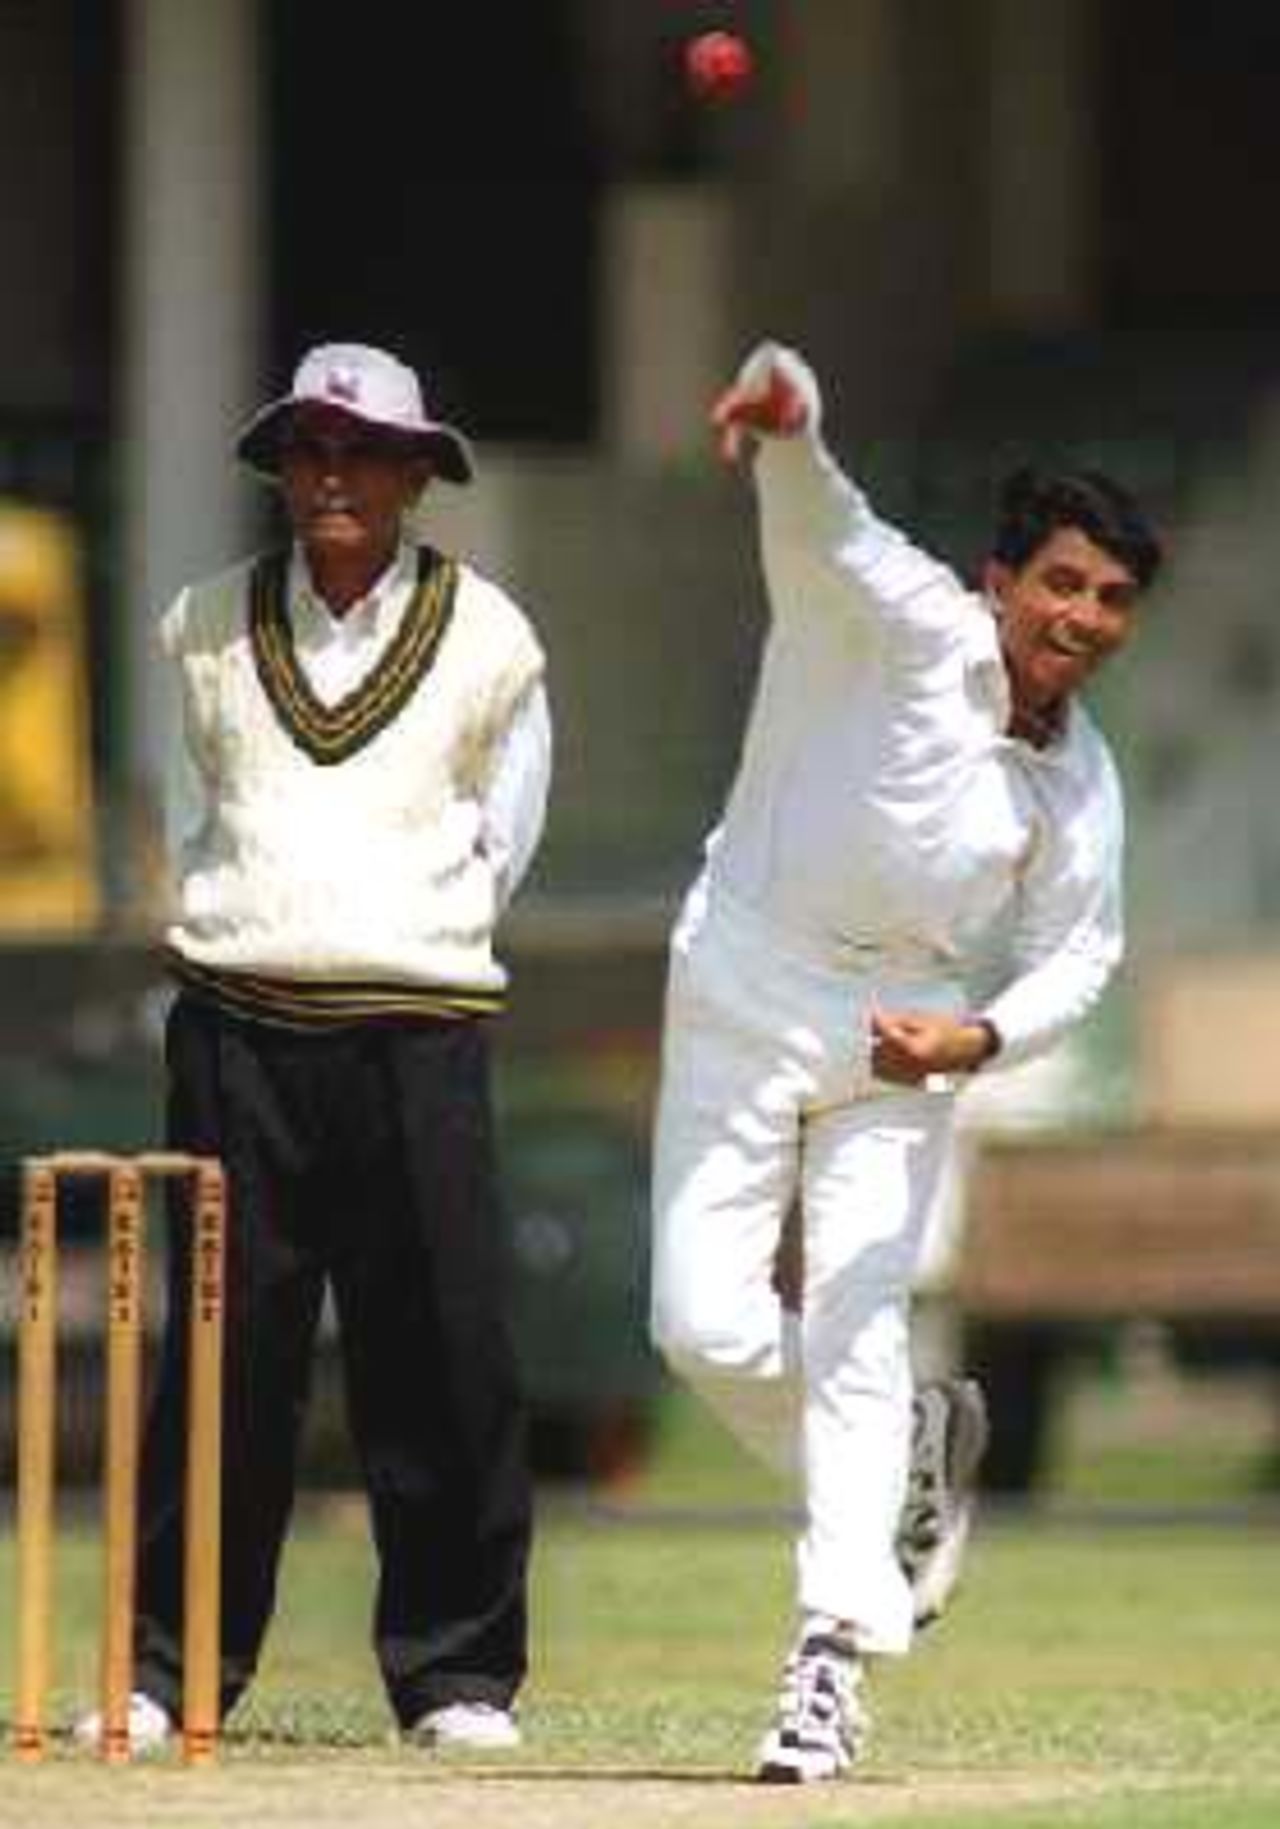 KCCA's Asad Ahmed bowls during the match against NBP NBP Vs KCCA at Gaddafi Stadium, Lahore,27 March 2000.